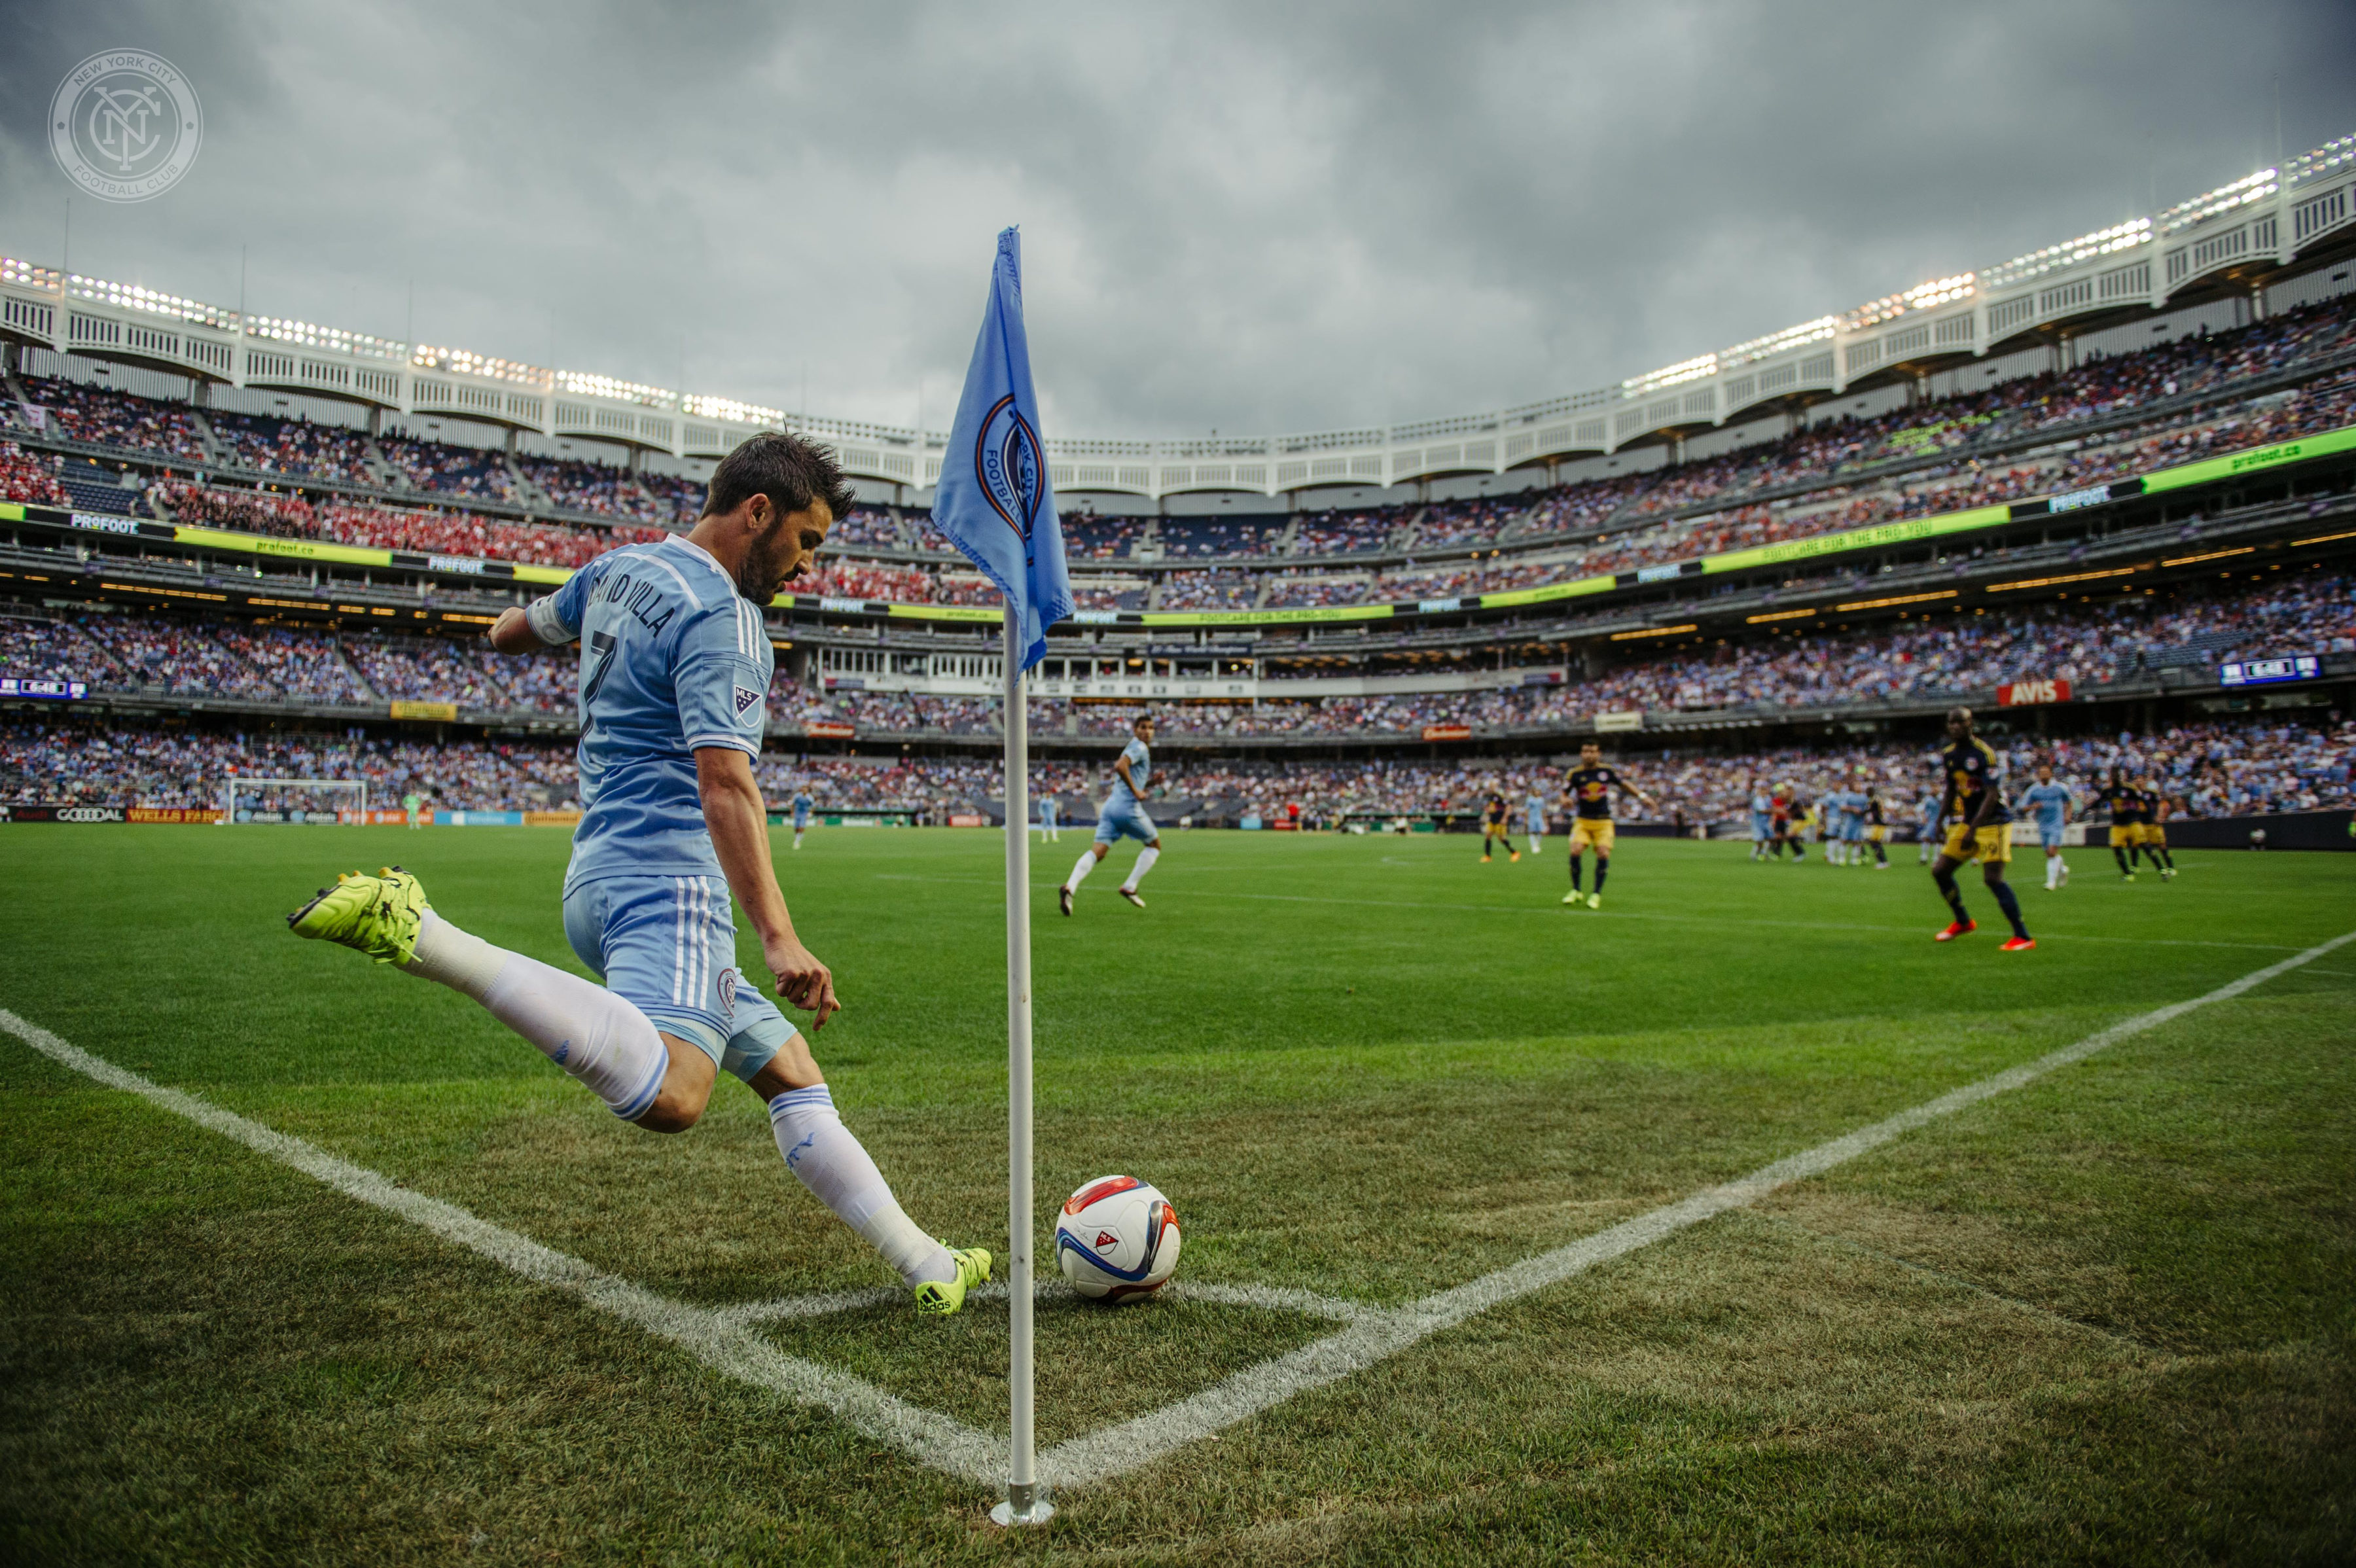 David Villa kicking a soccer ball 